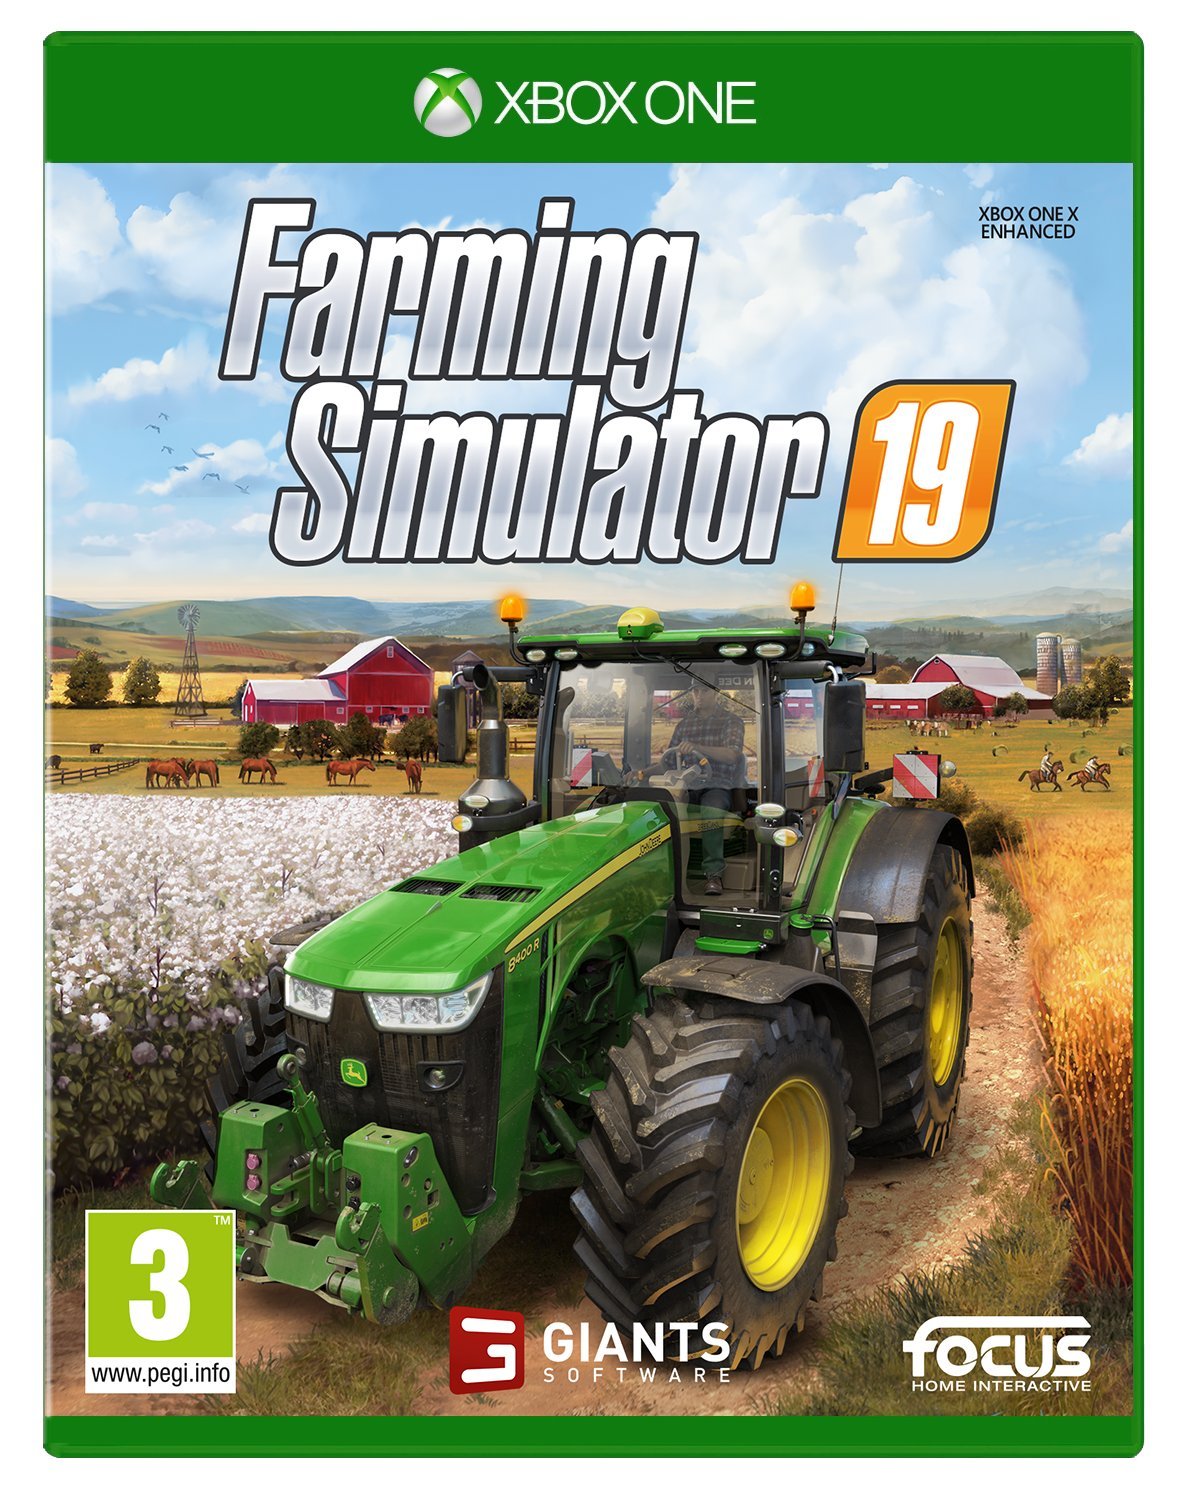 Buy Farming Simulator 19 Digital Download Key Xbox One With Bitcoin Ethereum Litecoin 